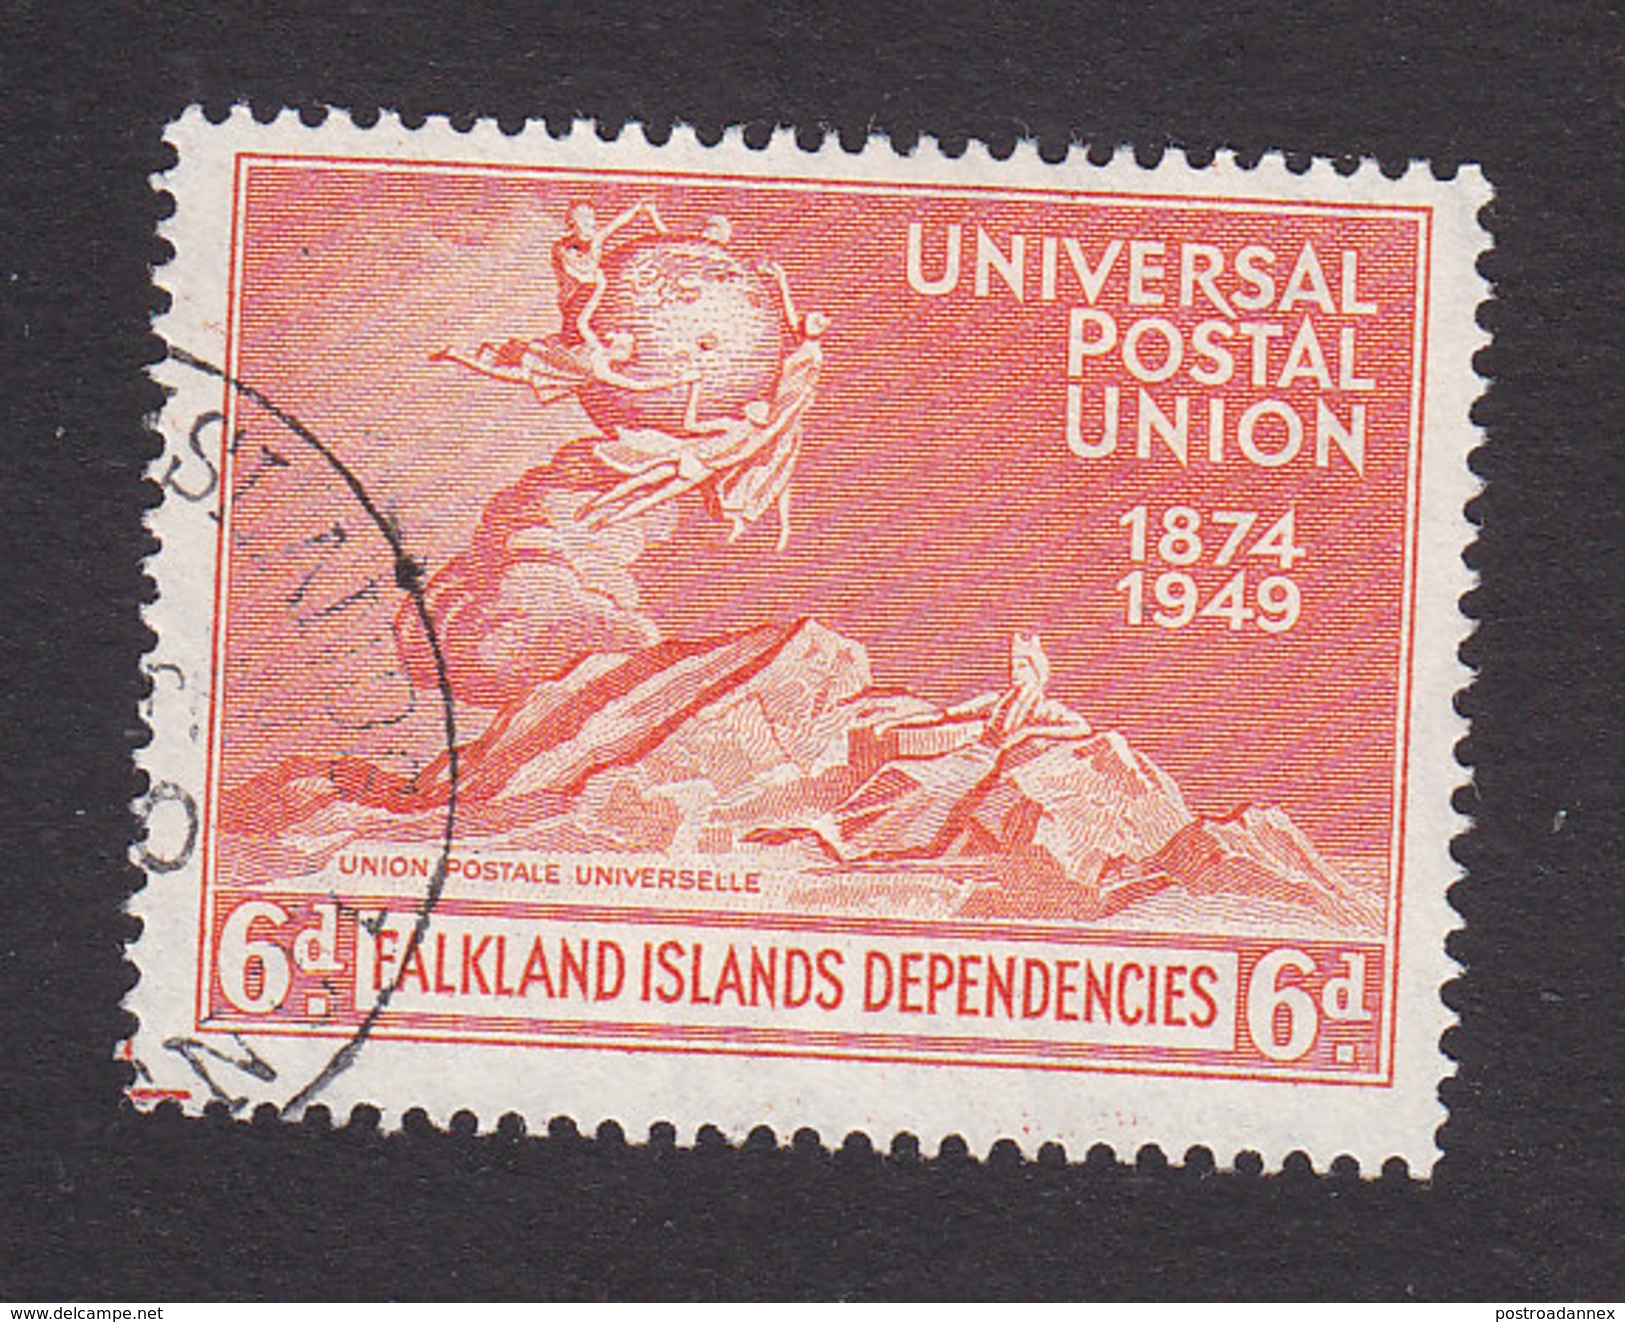 Falkland Islands Dependencies, Scott #1L17, Used, UPU, Issued 1949 - Falkland